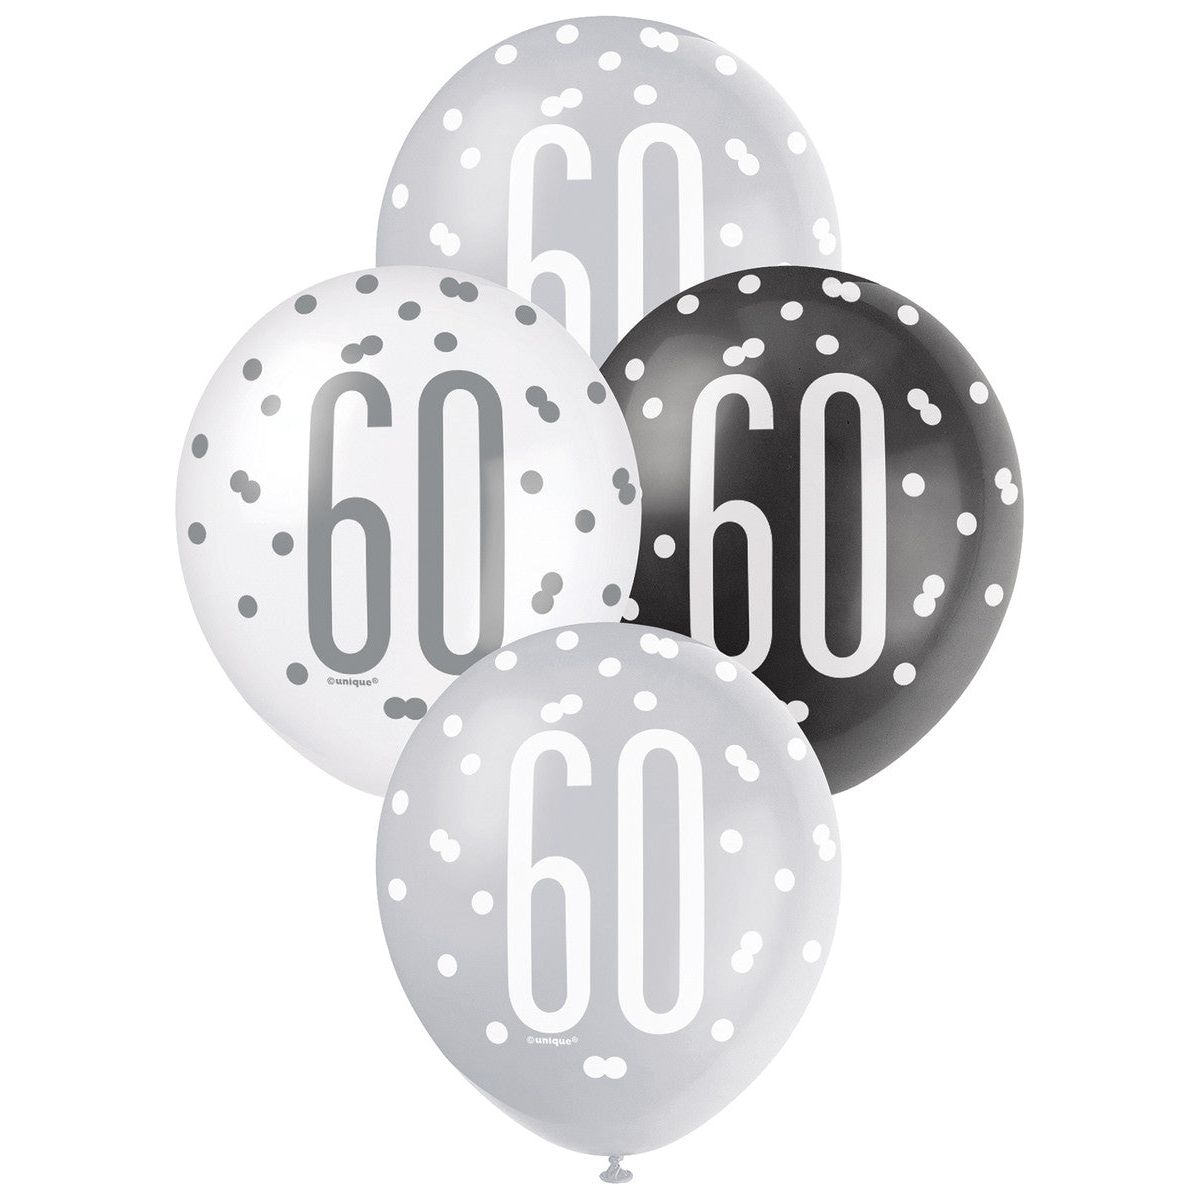 Black, Silver & White 60th Birthday - Latex Balloons - Dollars and Sense